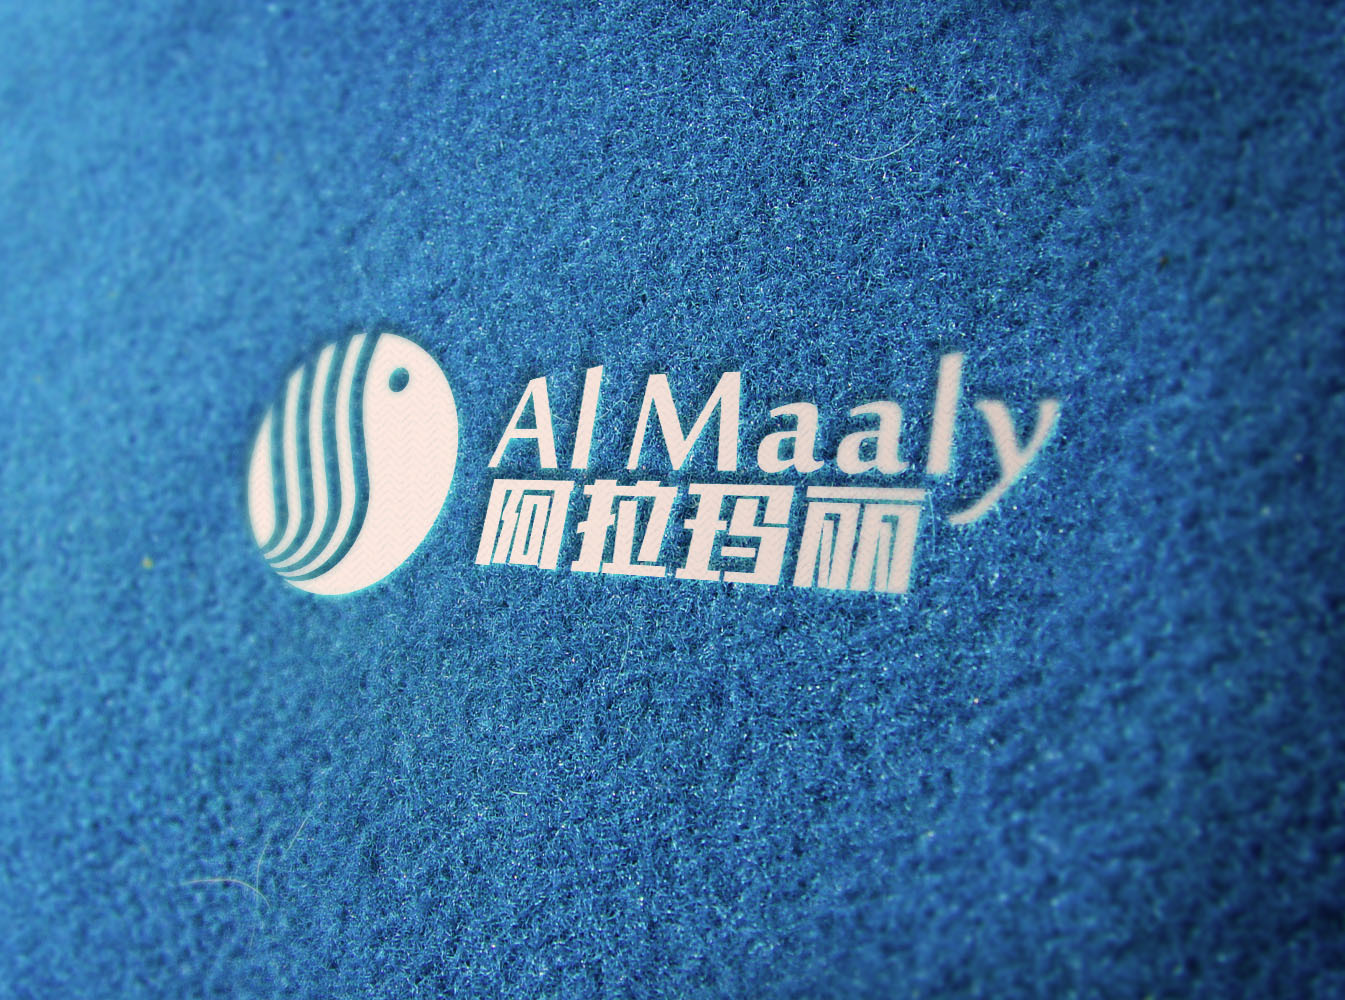 AL MAALY 品牌设计图4